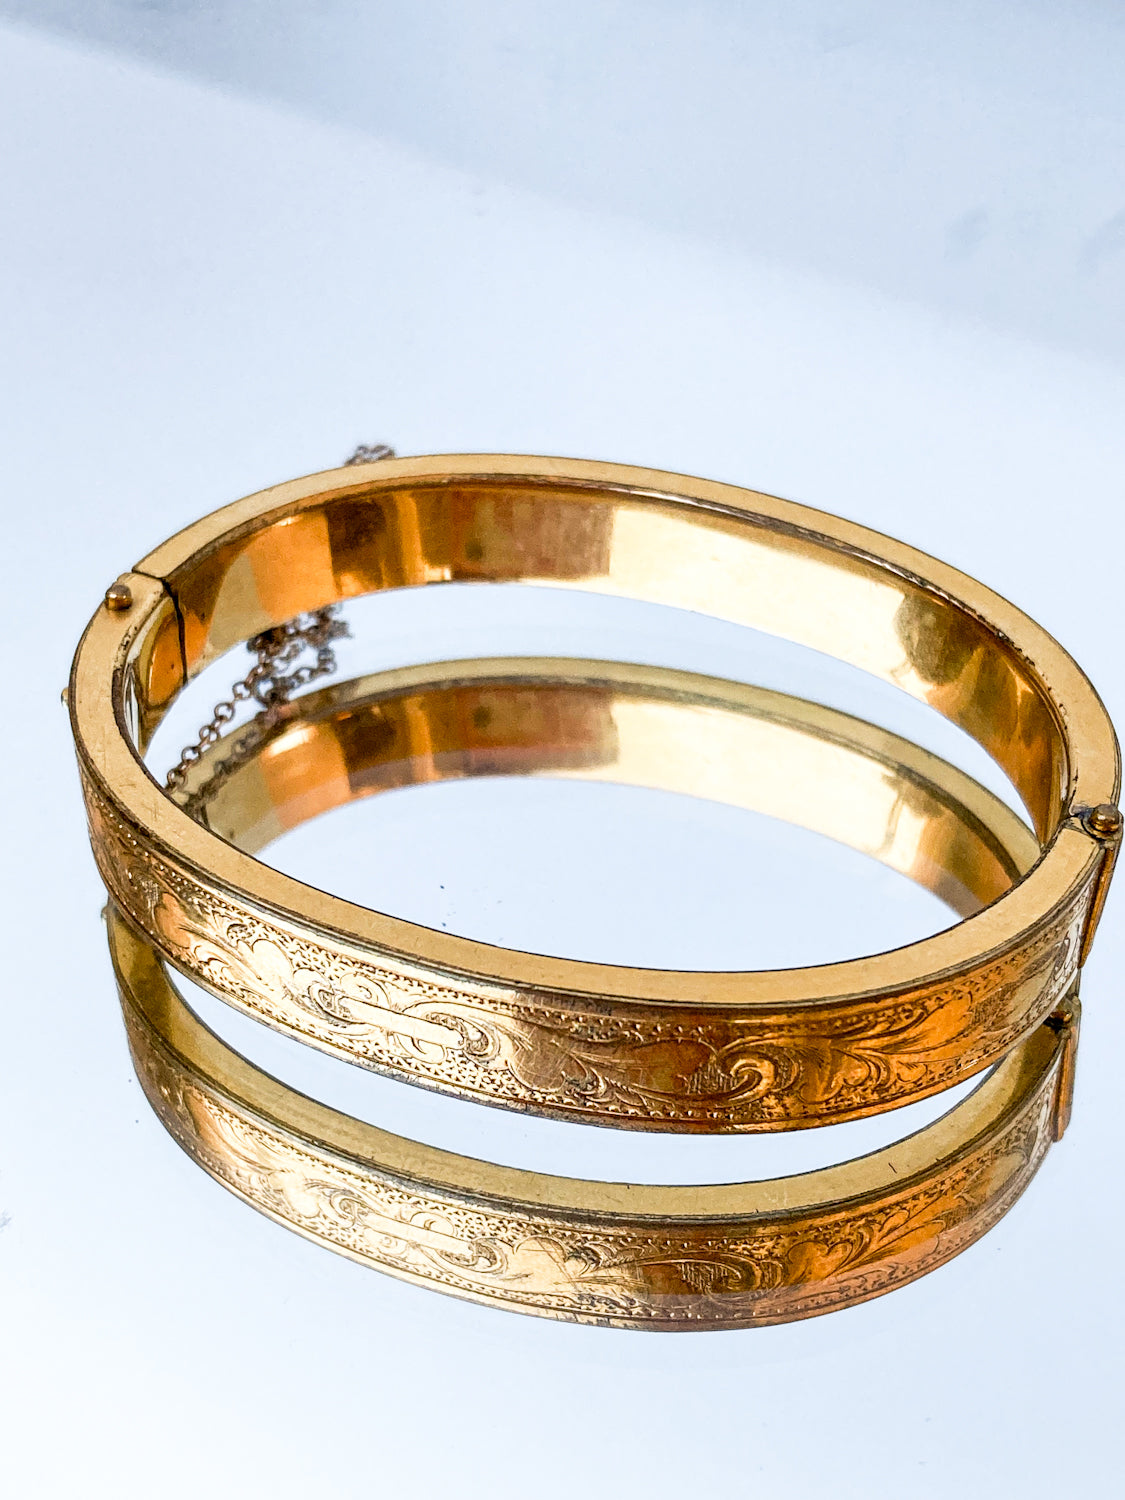 Antique Victorian Gold Filled Engraved Hinged Bangle Bracelet on mirror